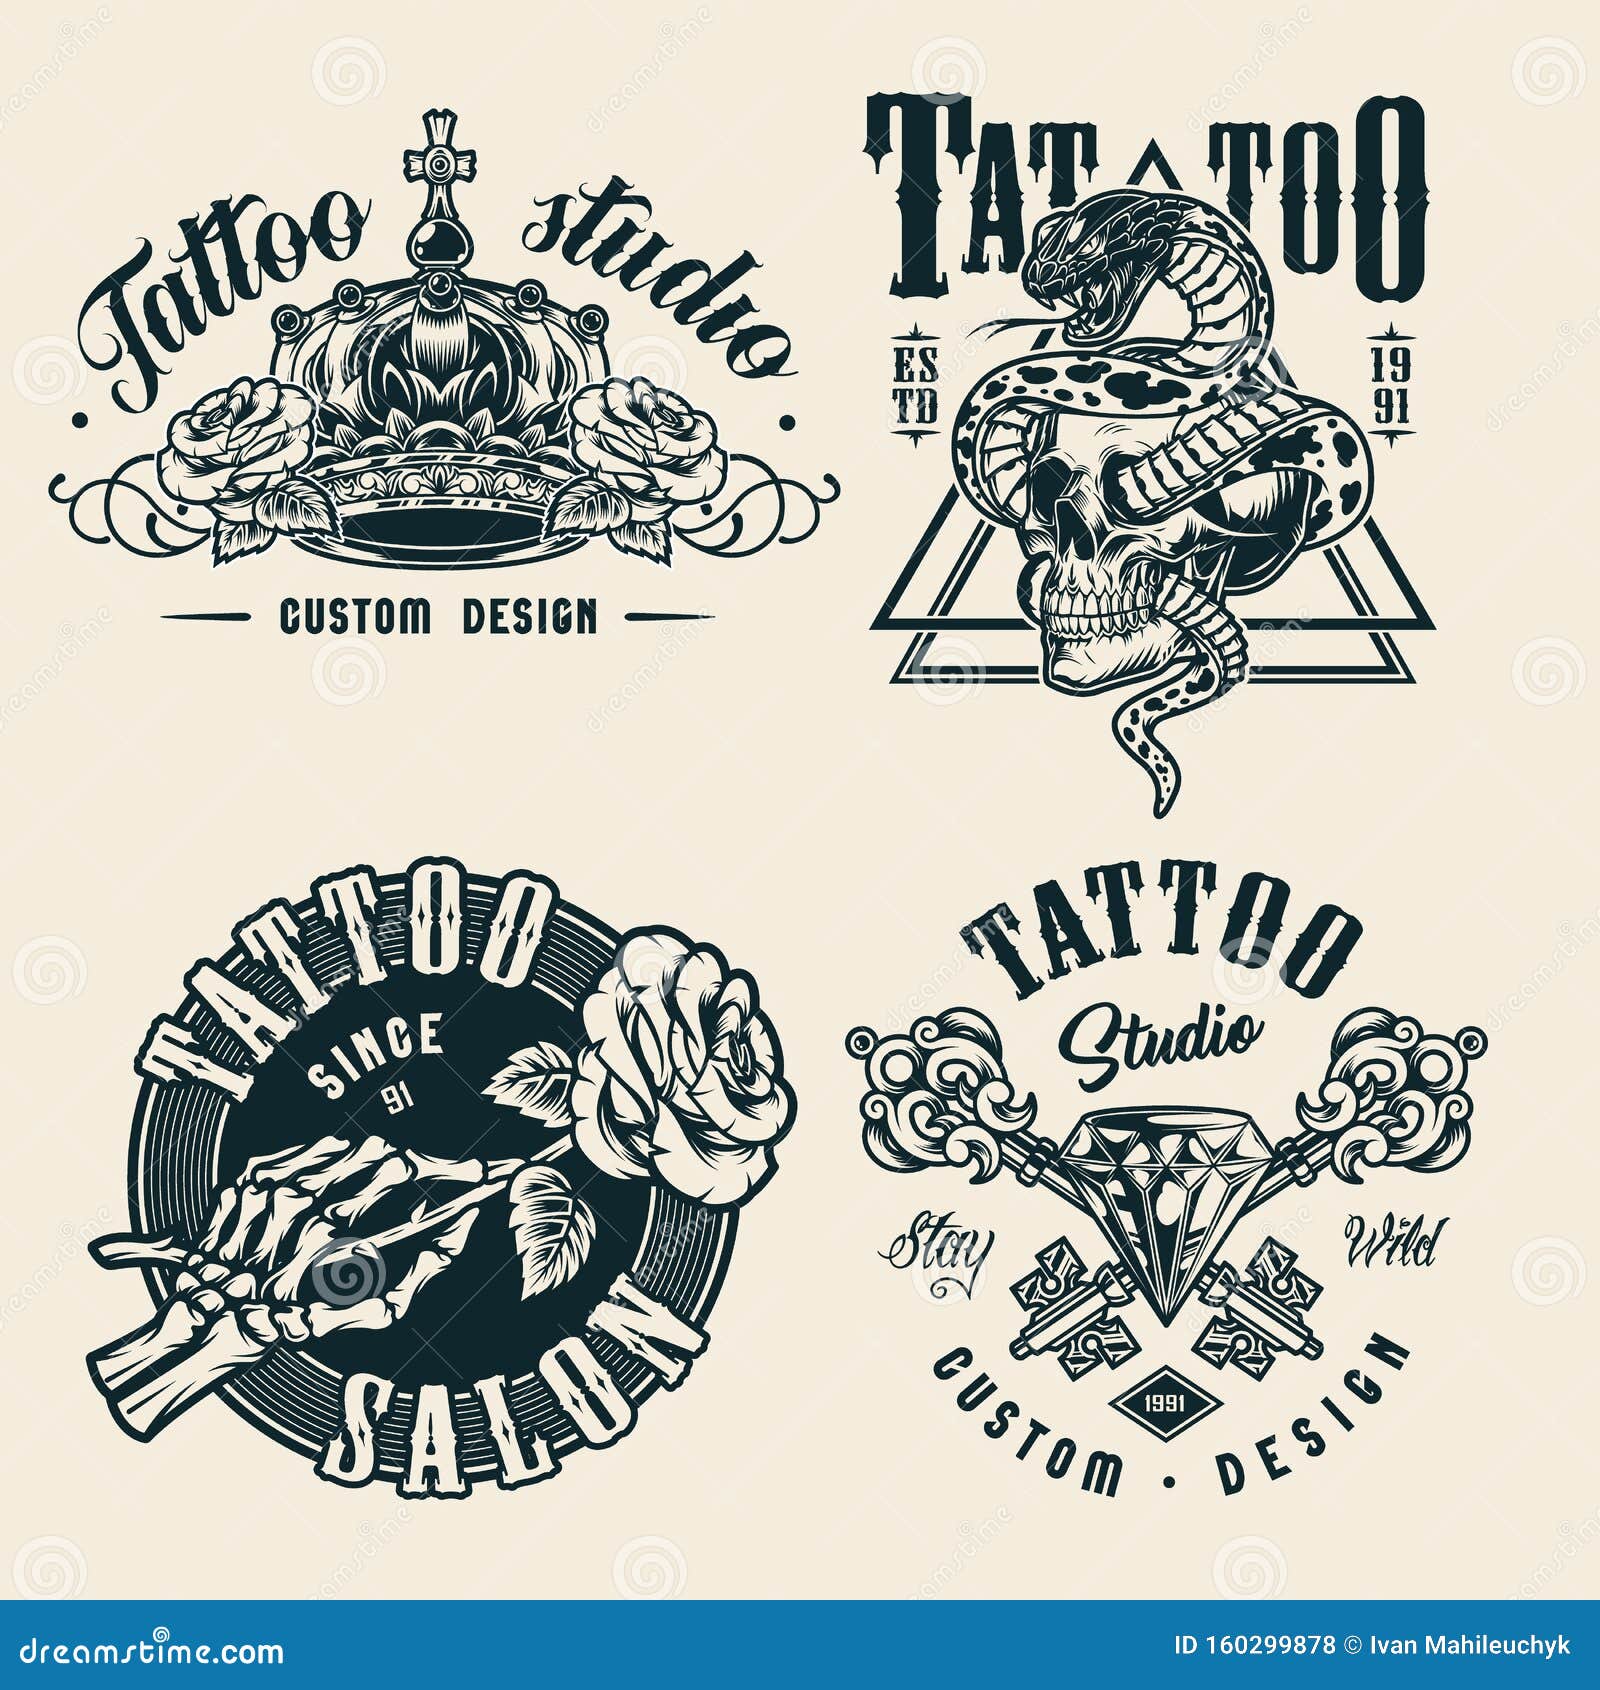 Tattoo Designer Art Crown Services Vector Design Clipart  Royal Crown Tattoo  Design HD Png Download  2073x17361848666  PngFind